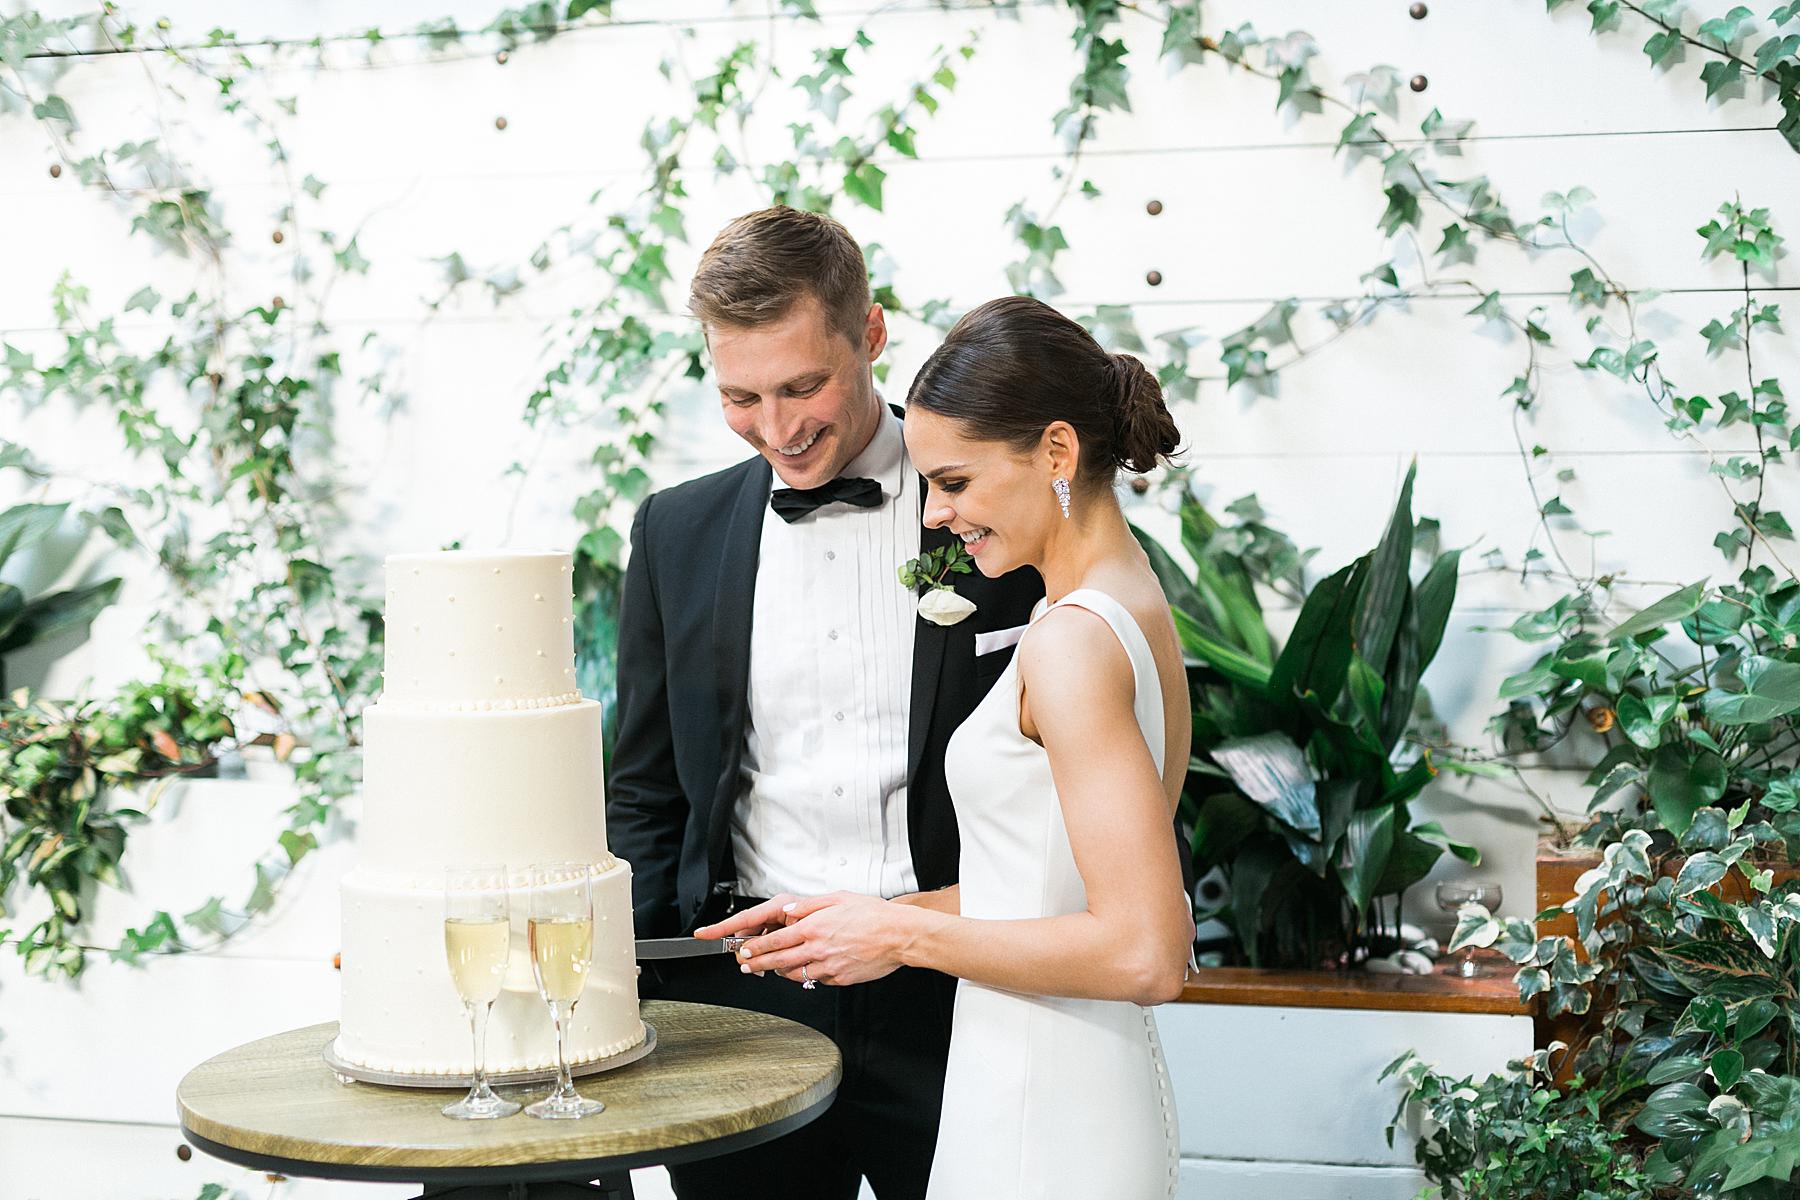 newlyweds cutting cake at wedding reception at ivy house, milwaukee, wisconsin